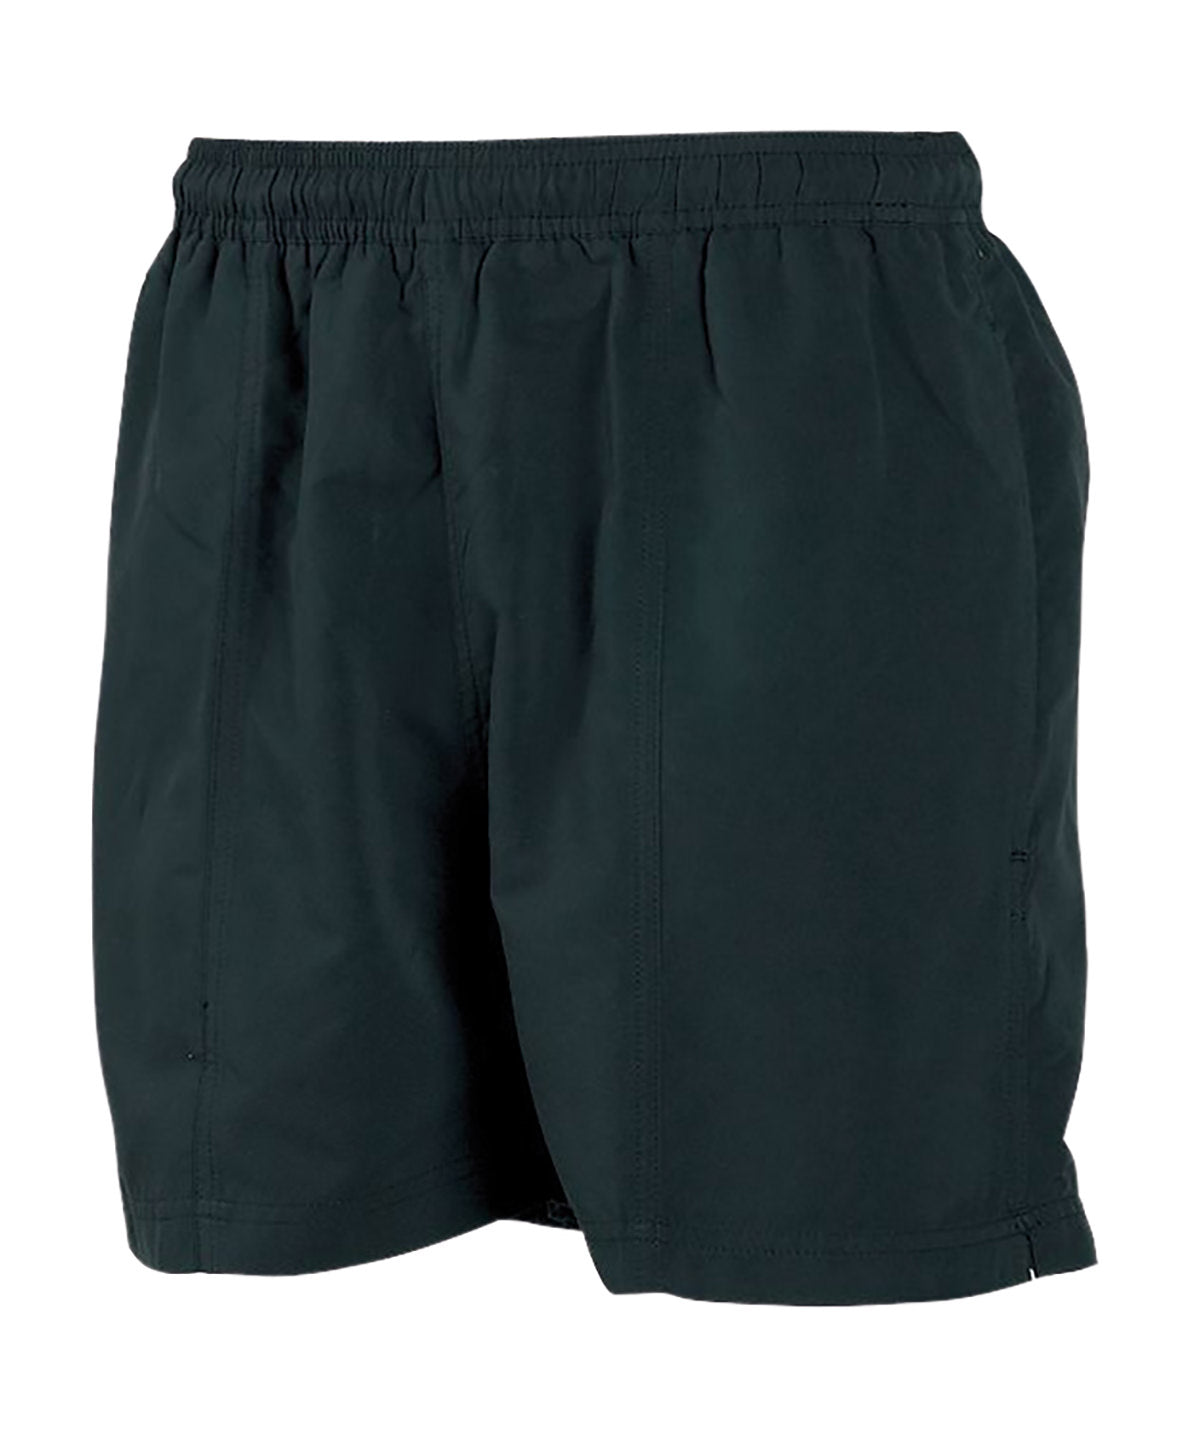 Stuttbuxur - All-purpose Lined Shorts